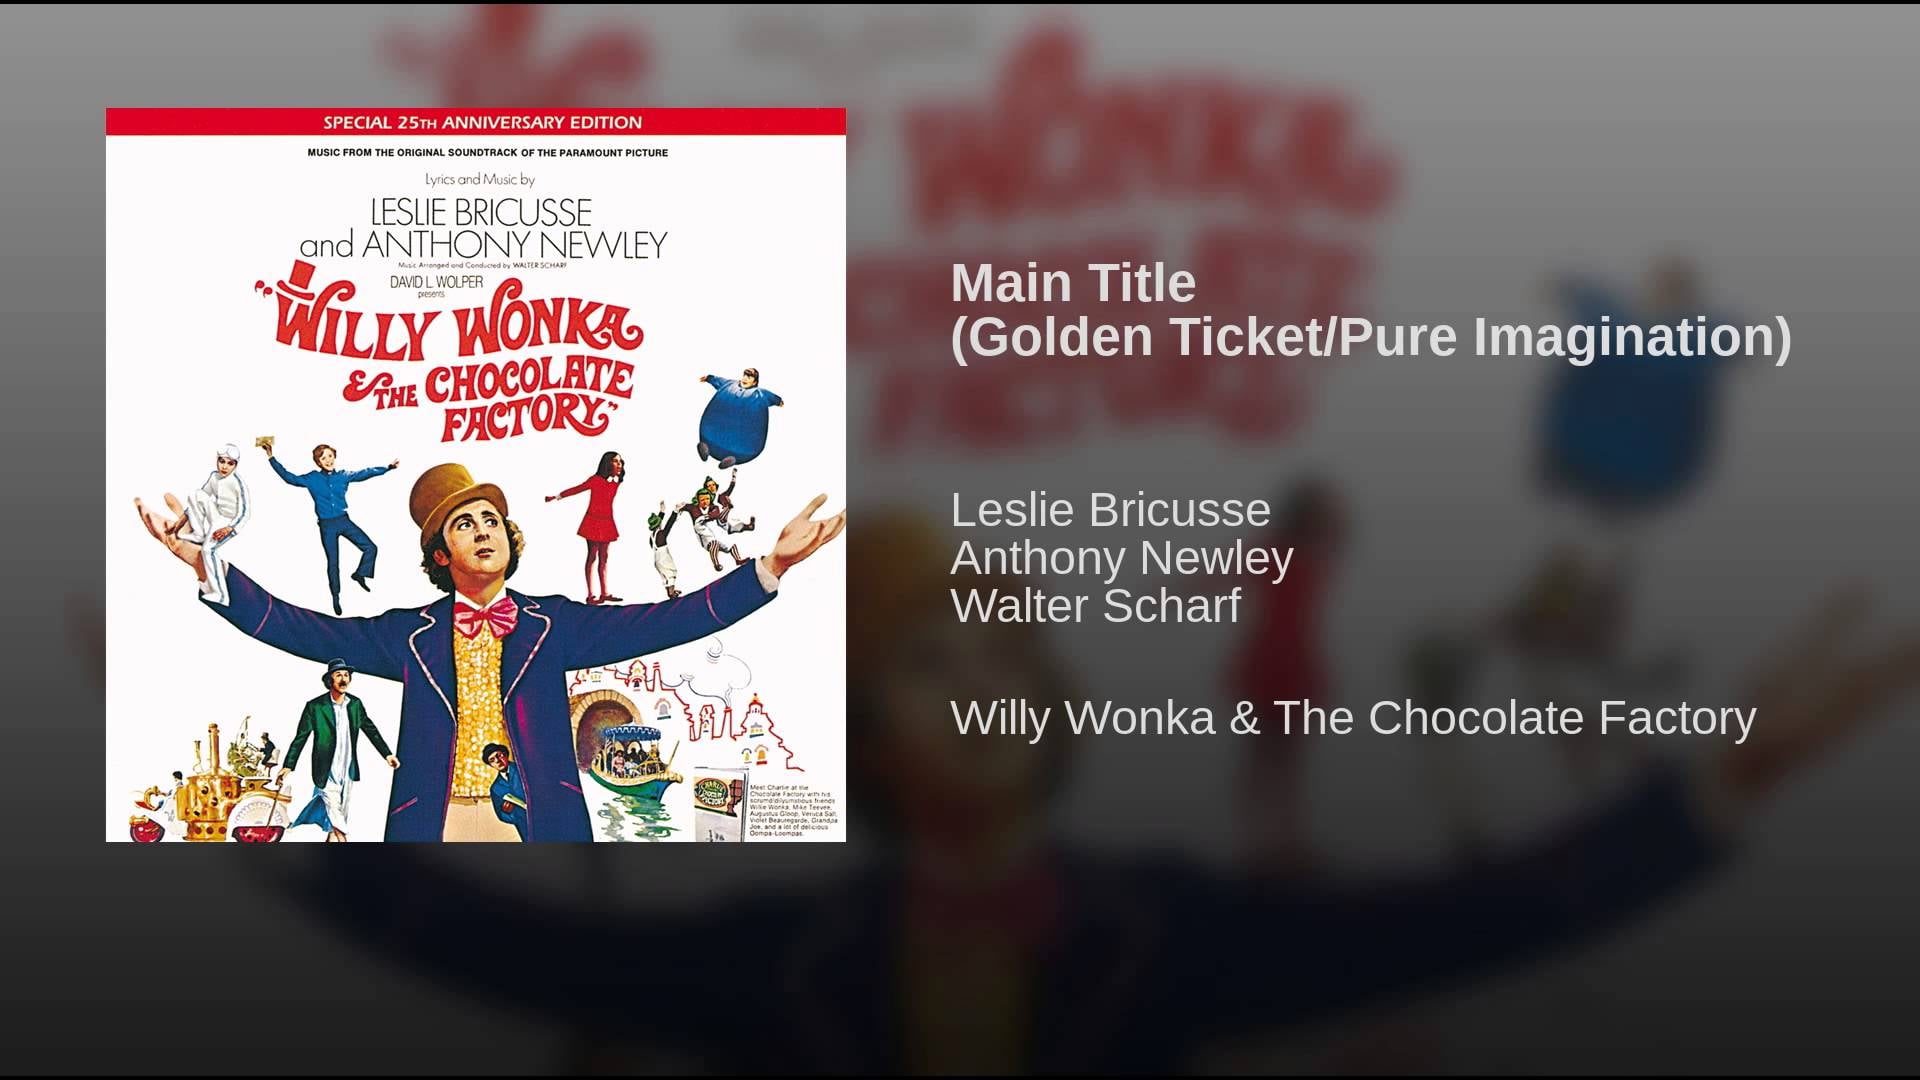 Pure imagination wonka. Charlie and the Chocolate Factory Oompa Loompa. Willy Wonka песня. Gobstoppers Charlie and the Chocolate Factory. Pure imagination Willy Wonka.